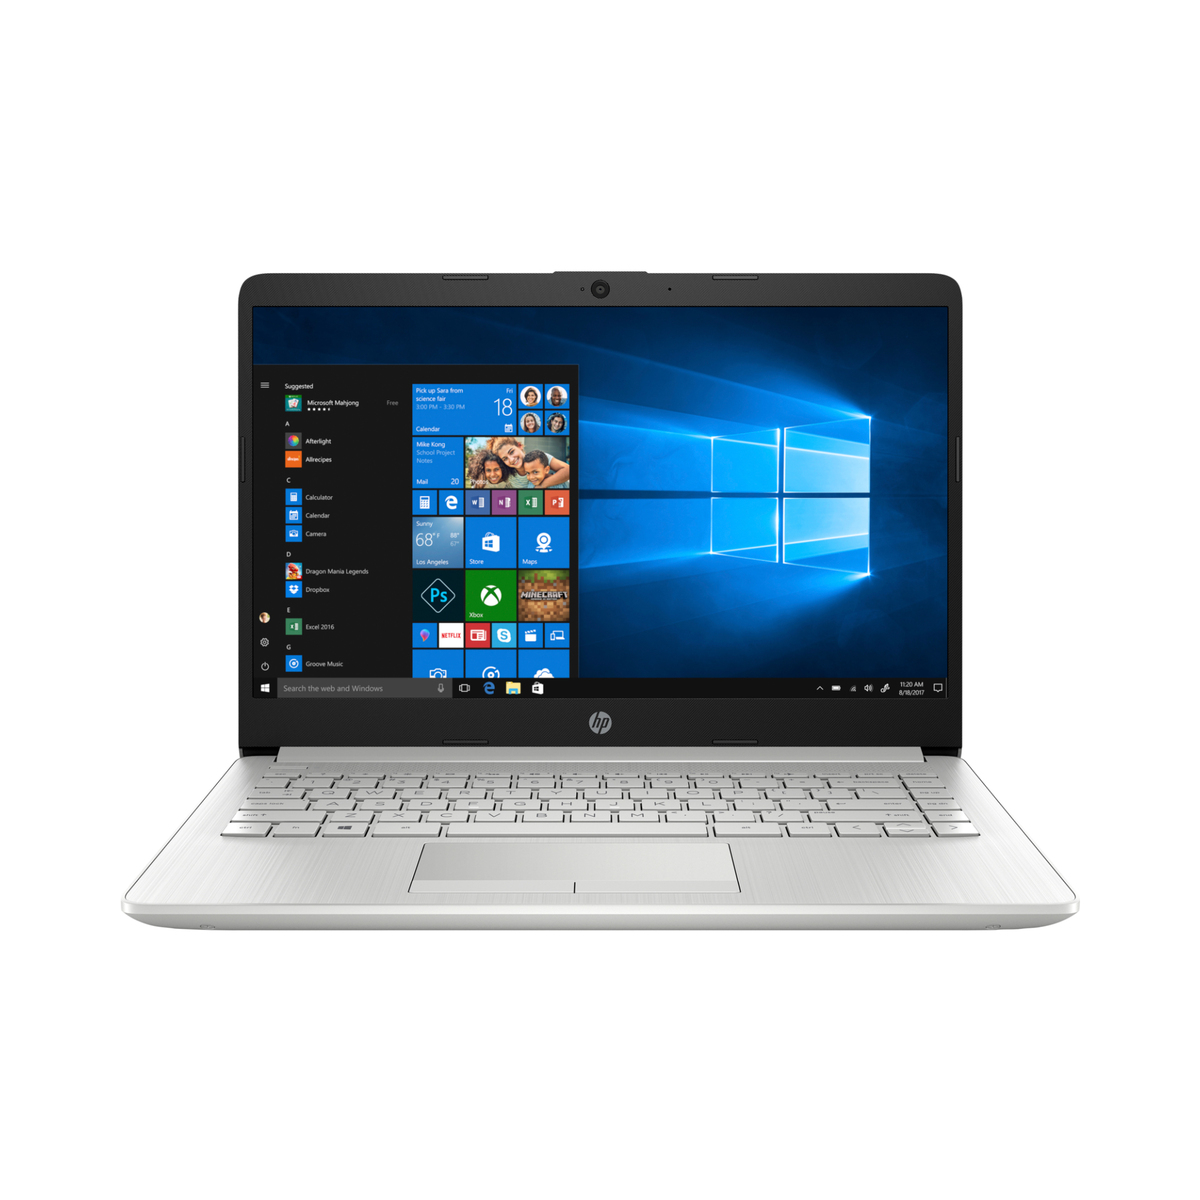 HP Laptop 14-dk1025wm,AMD Ryzen 3 3250U,1TB HDD,4GB RAM,AMD Radeon Vega 3 Graphics,14" HD,Windows 10